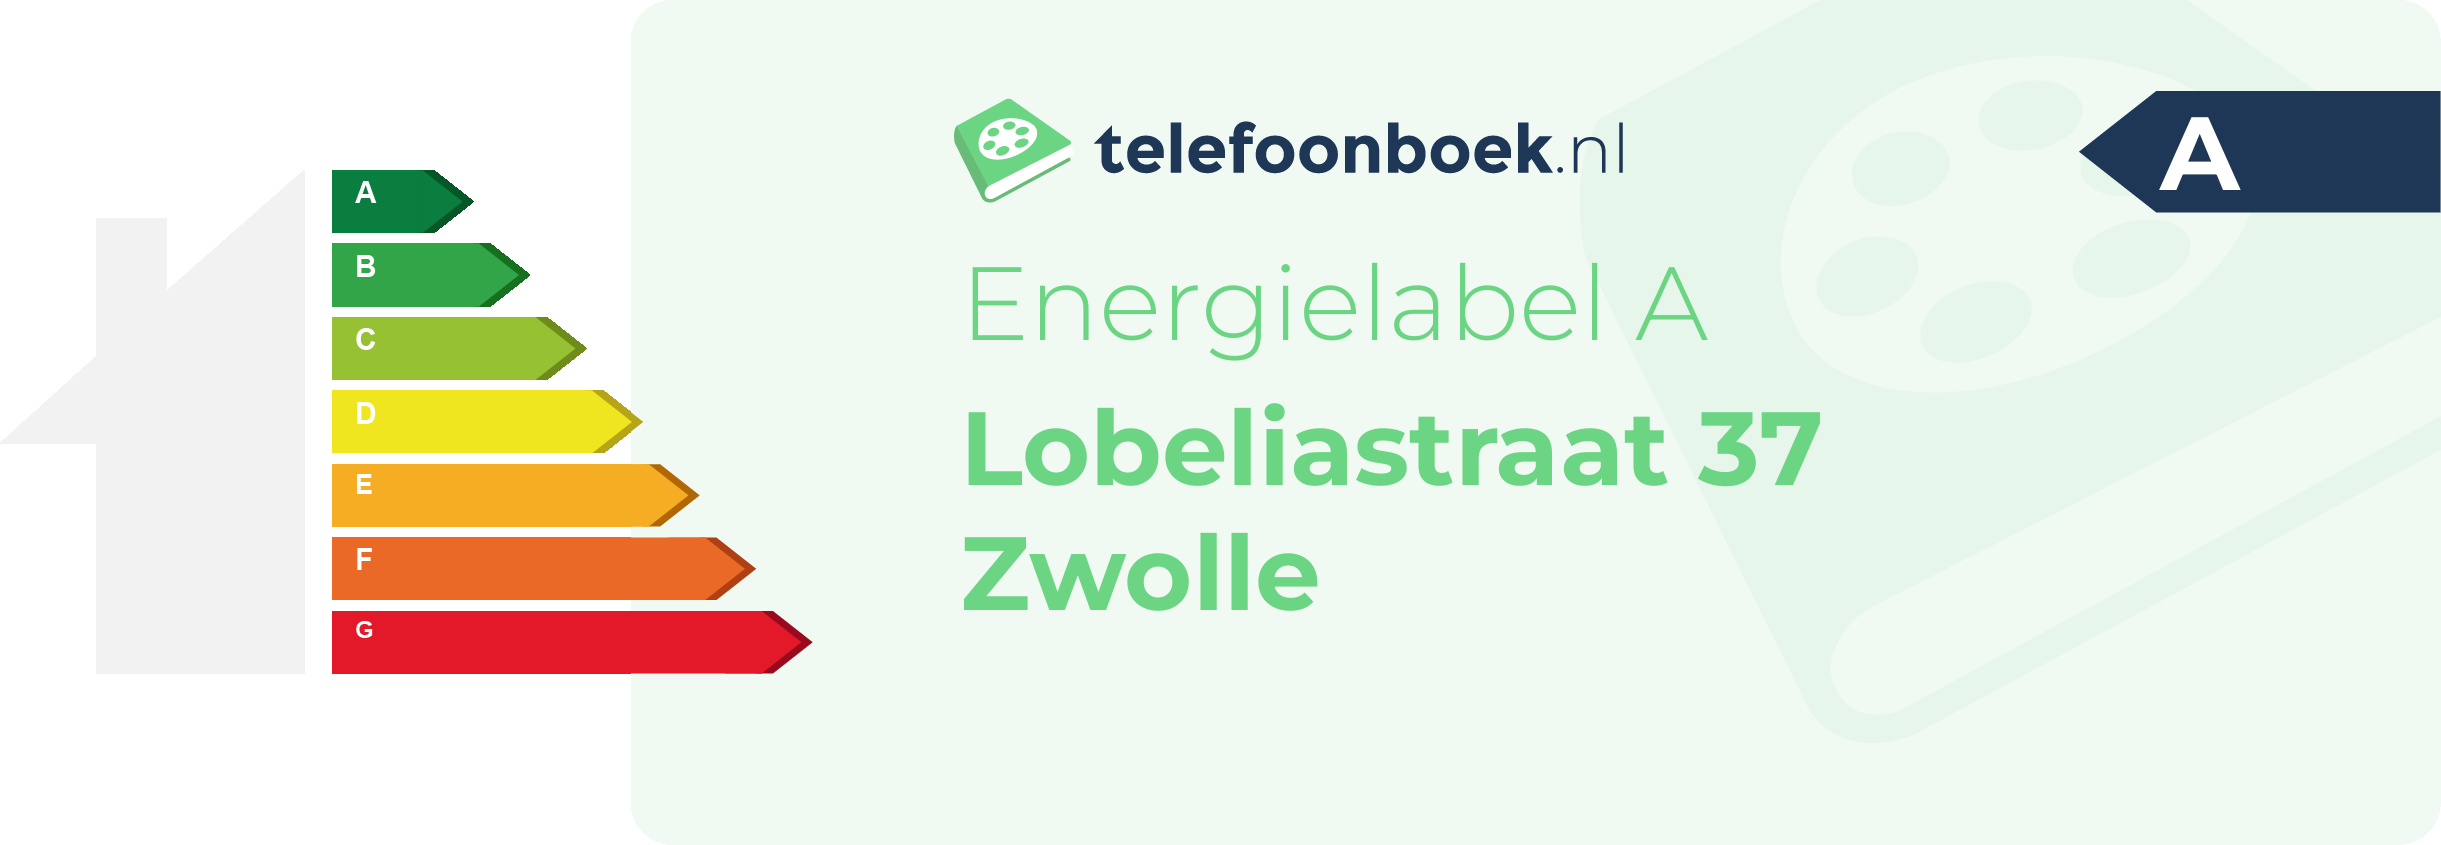 Energielabel Lobeliastraat 37 Zwolle